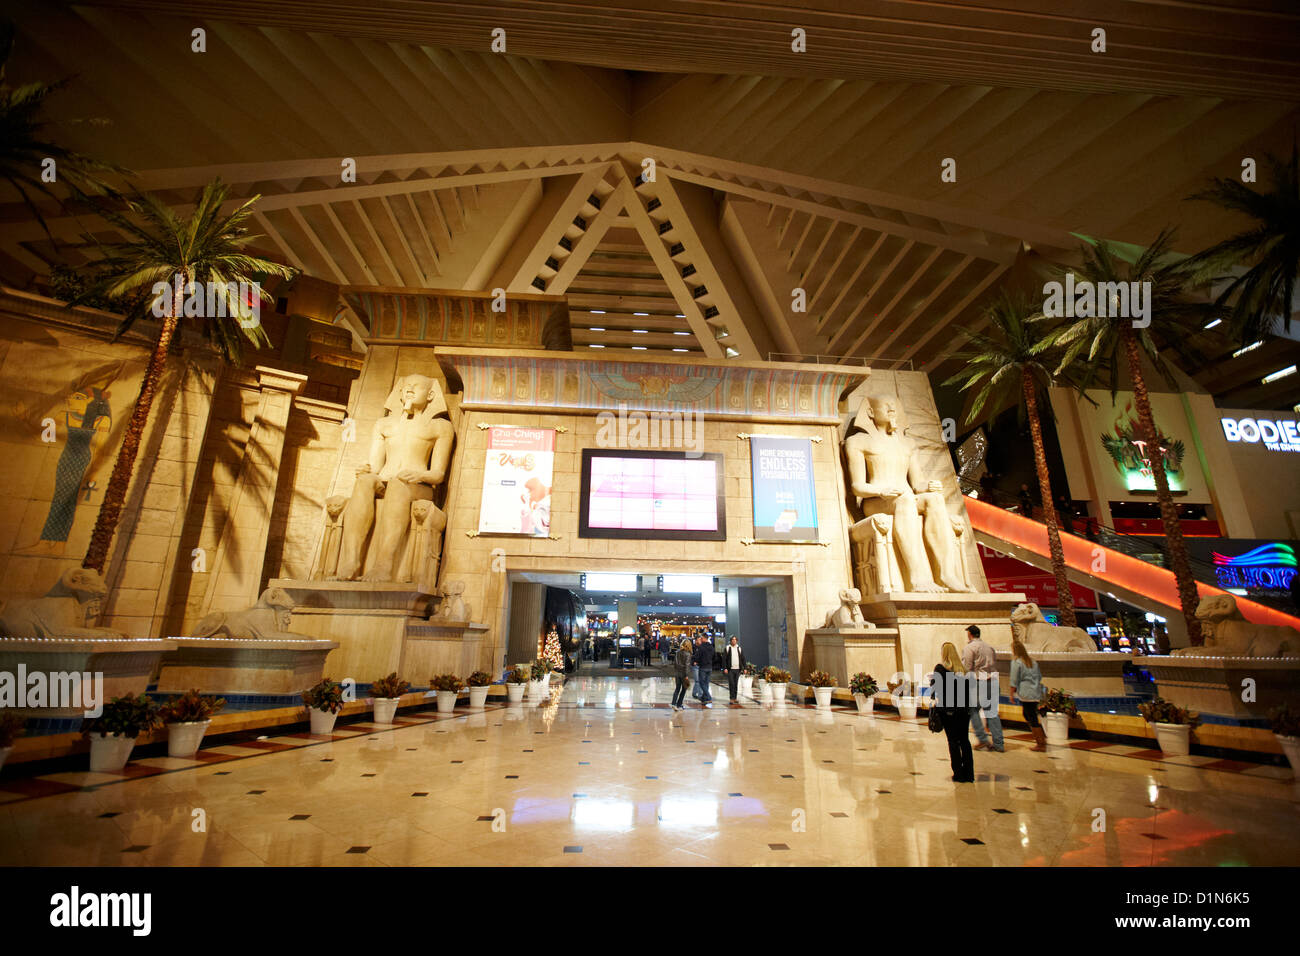 7,642 Las Vegas Casino Interior Images, Stock Photos, 3D objects, & Vectors